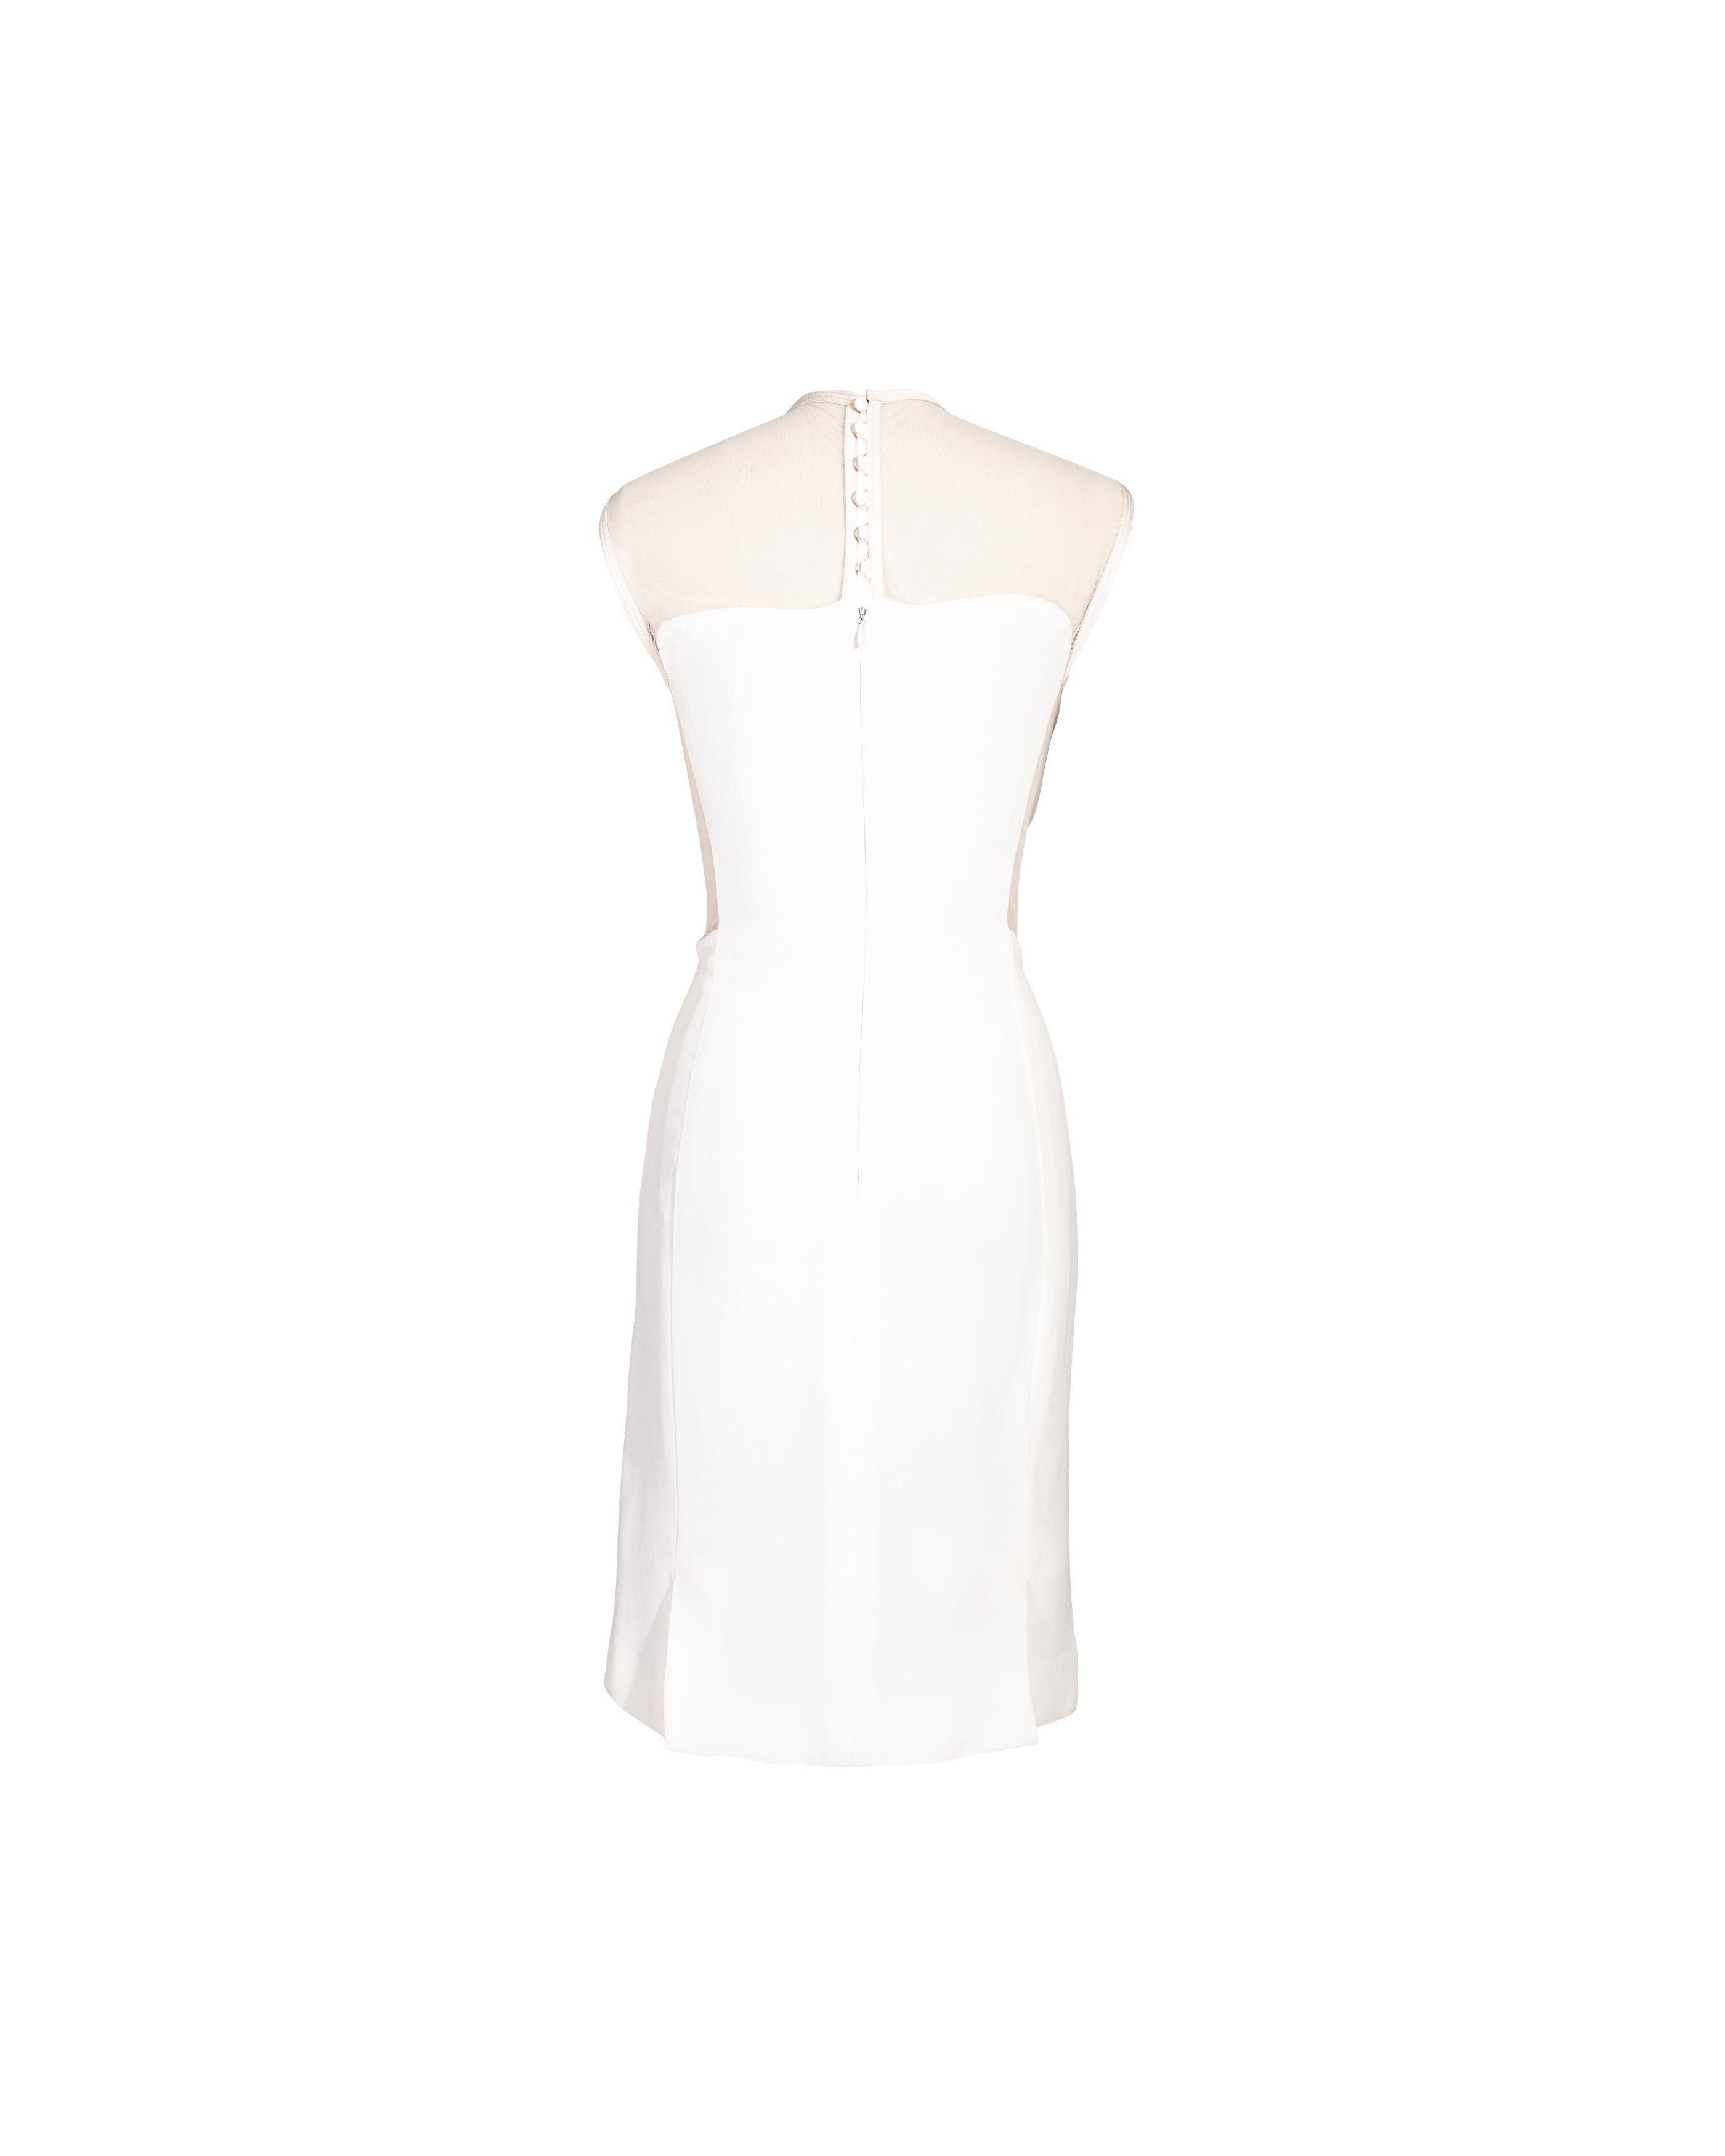 S/S 1996 Gianni Versace Mini-robe en maille blanche 1